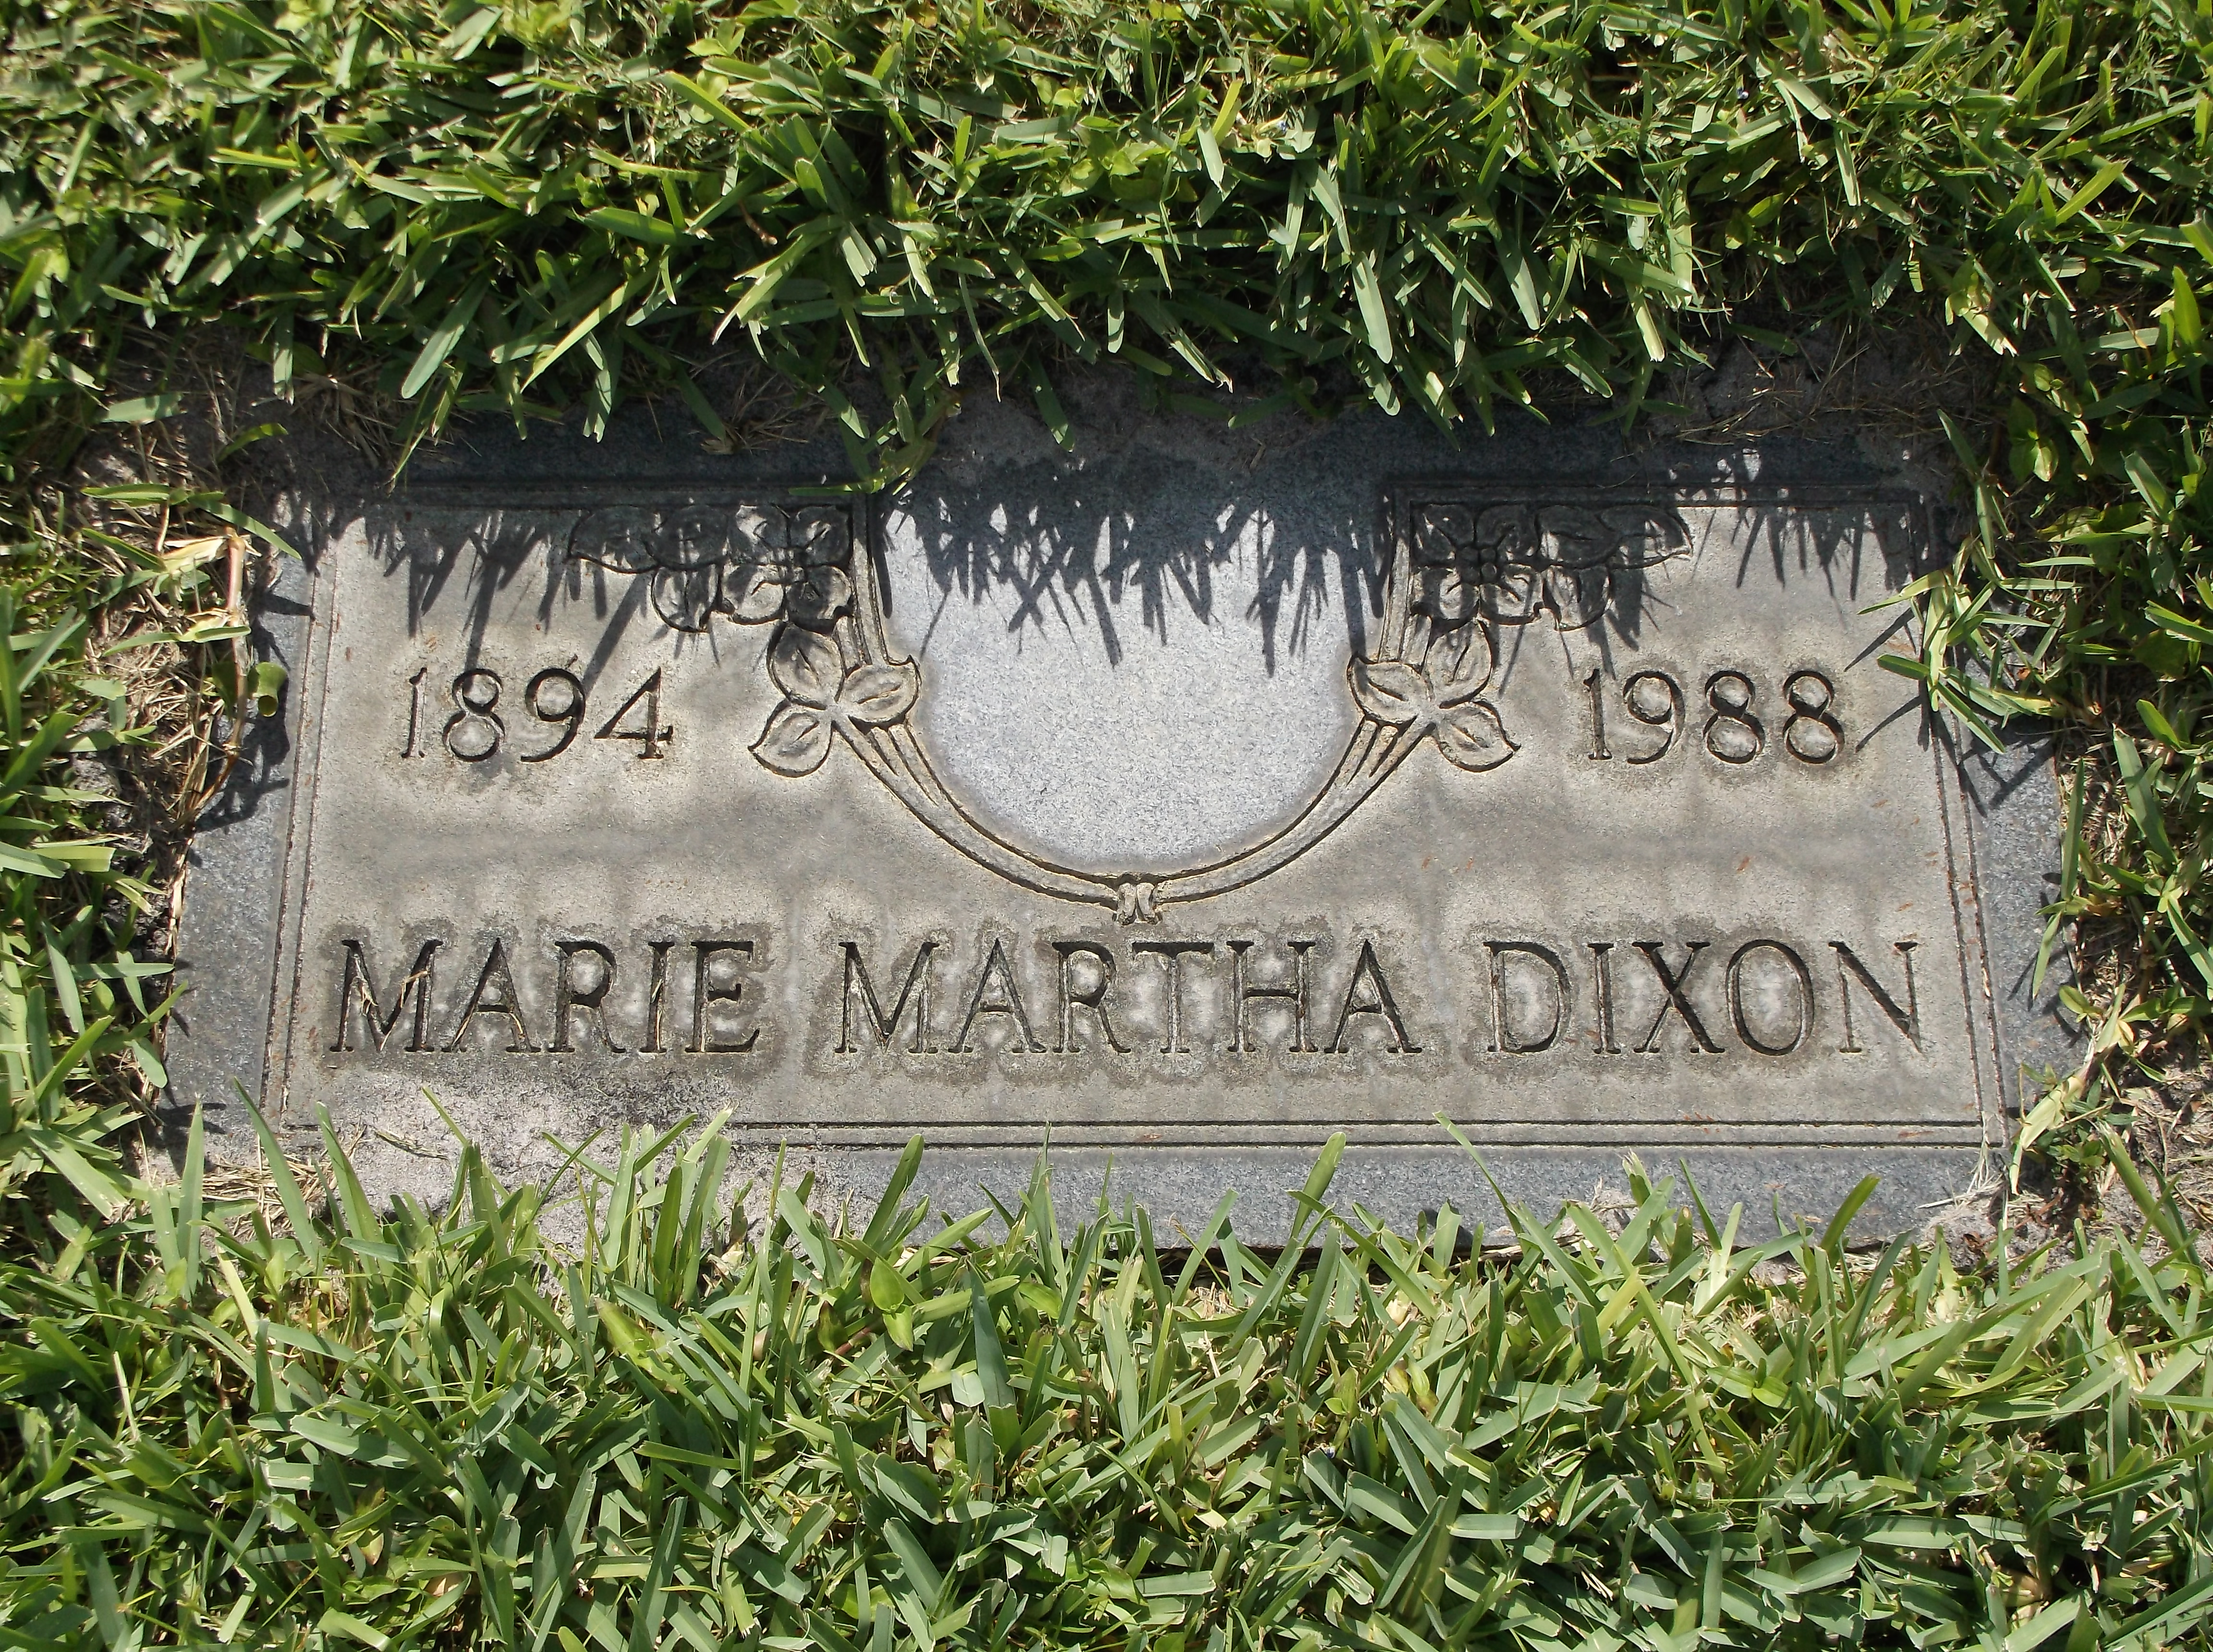 Marie Martha Dixon